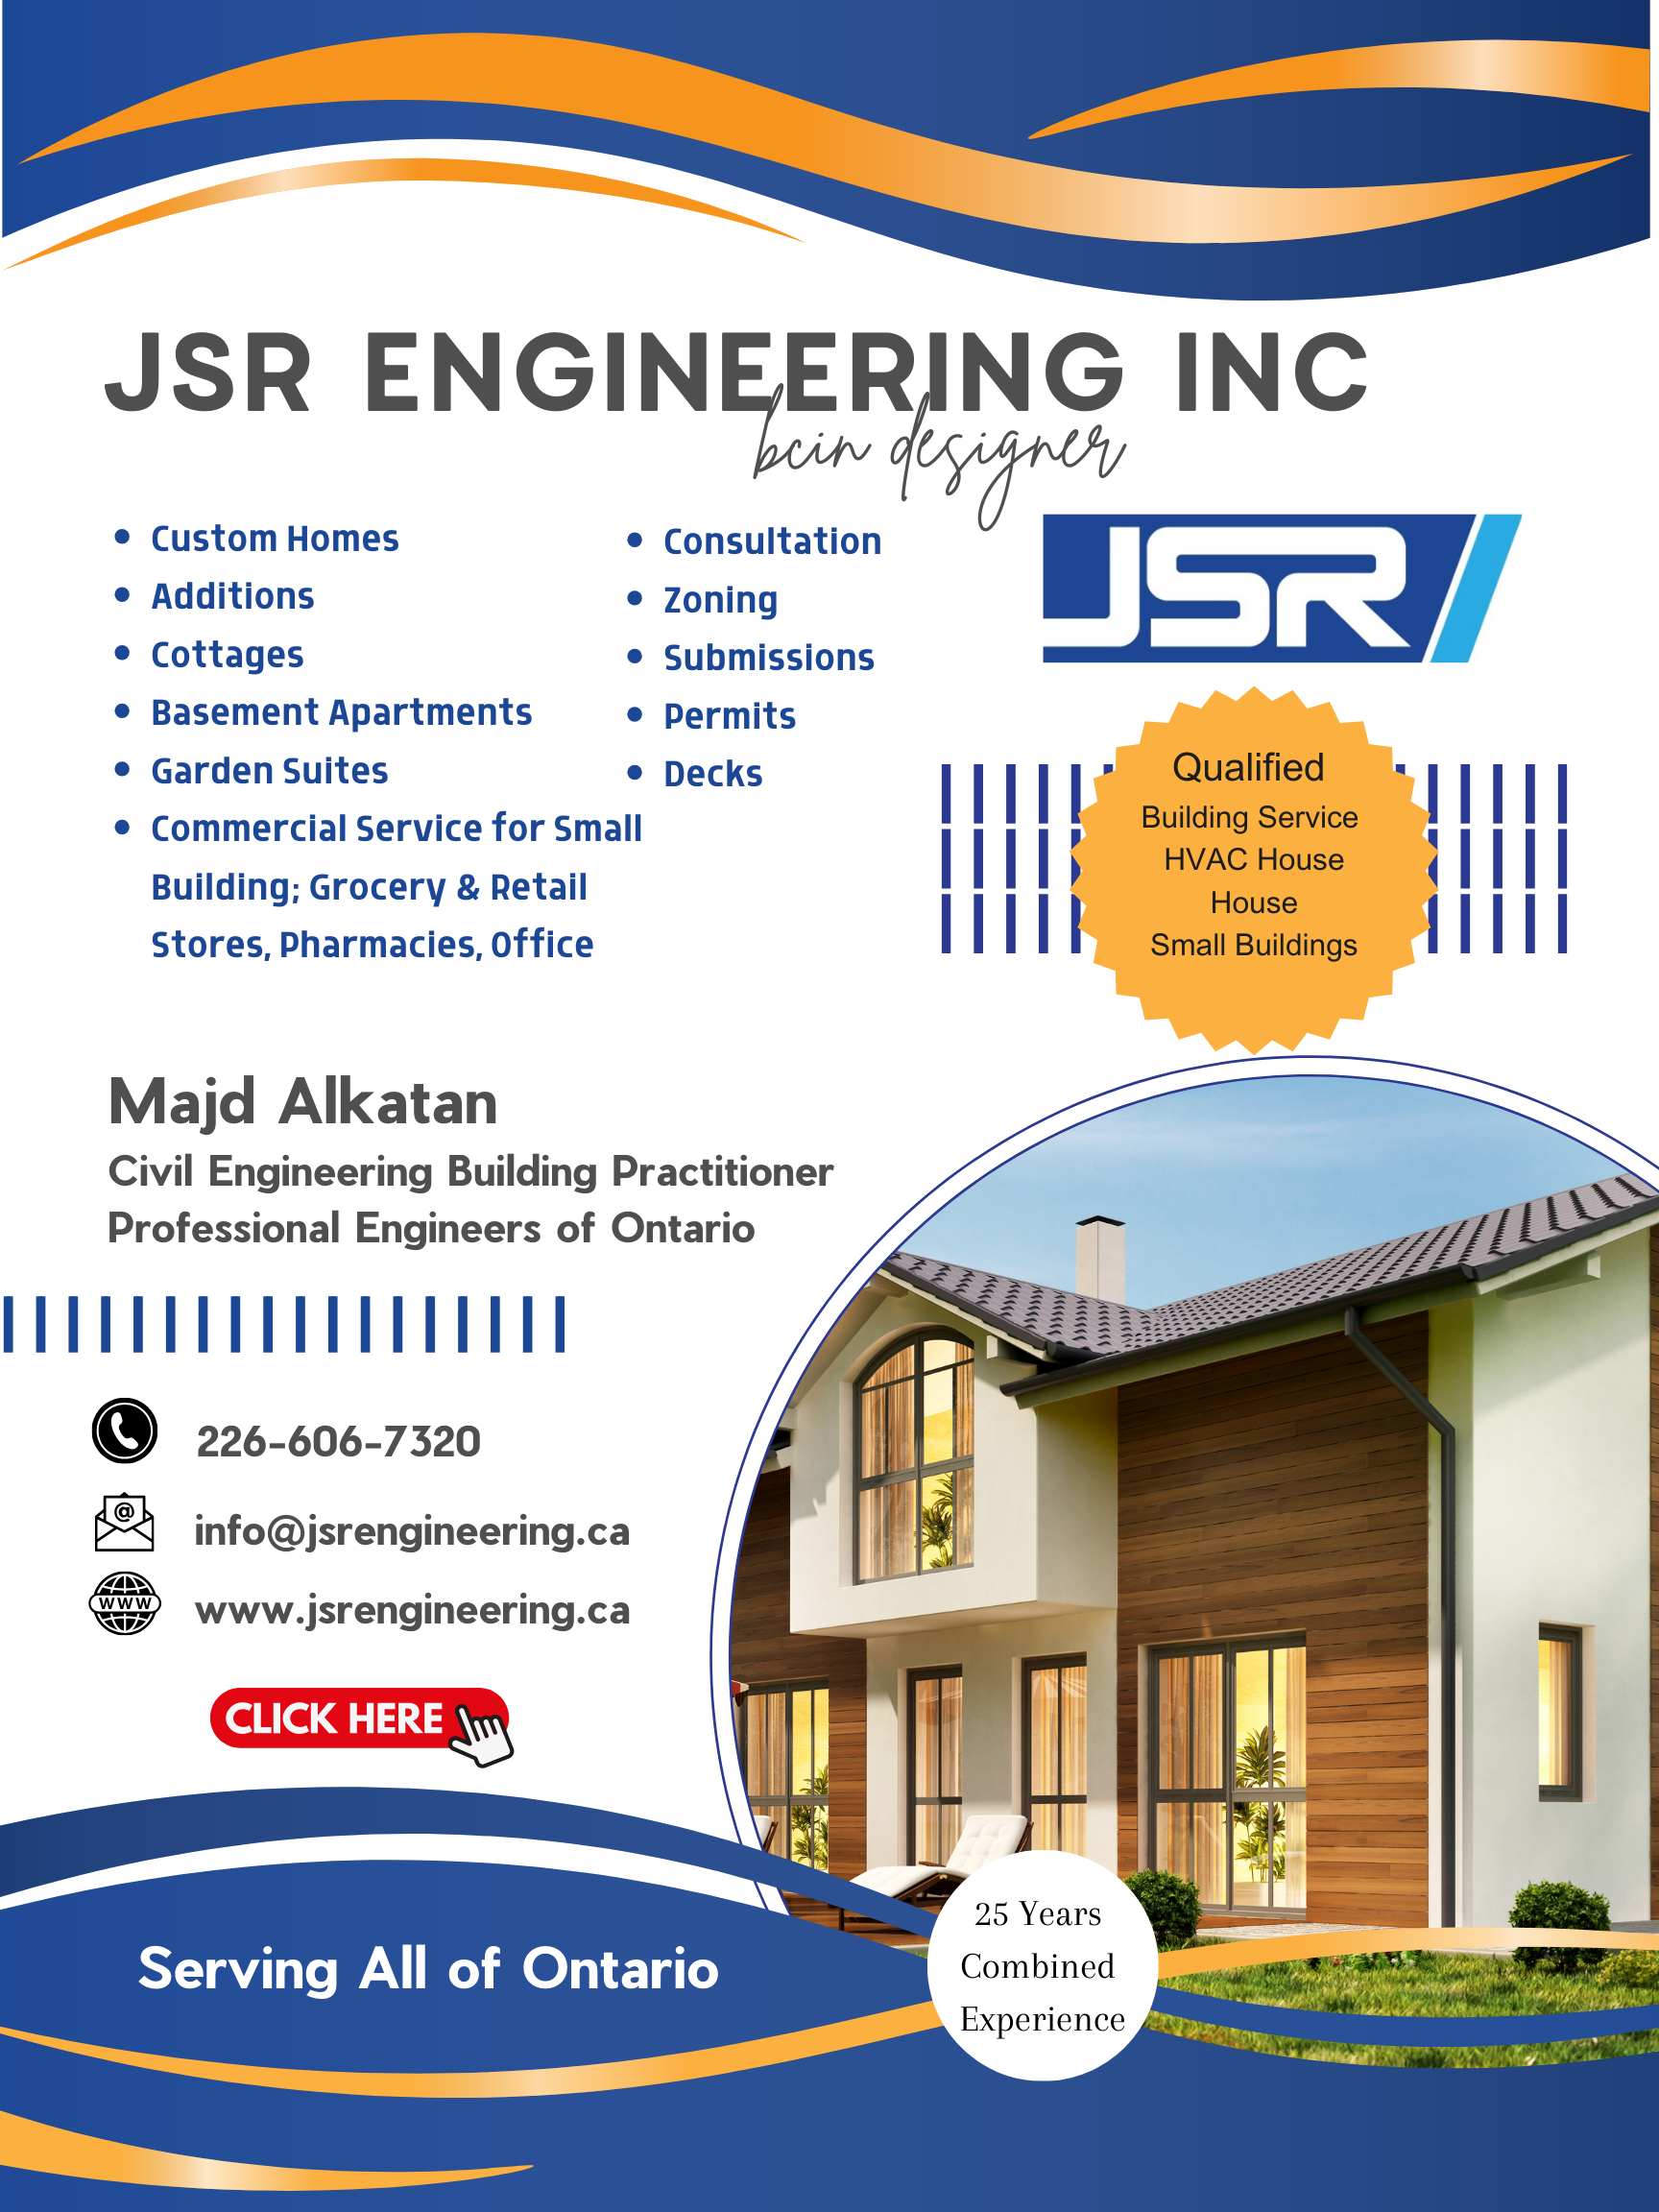 JSR Engineering Inc